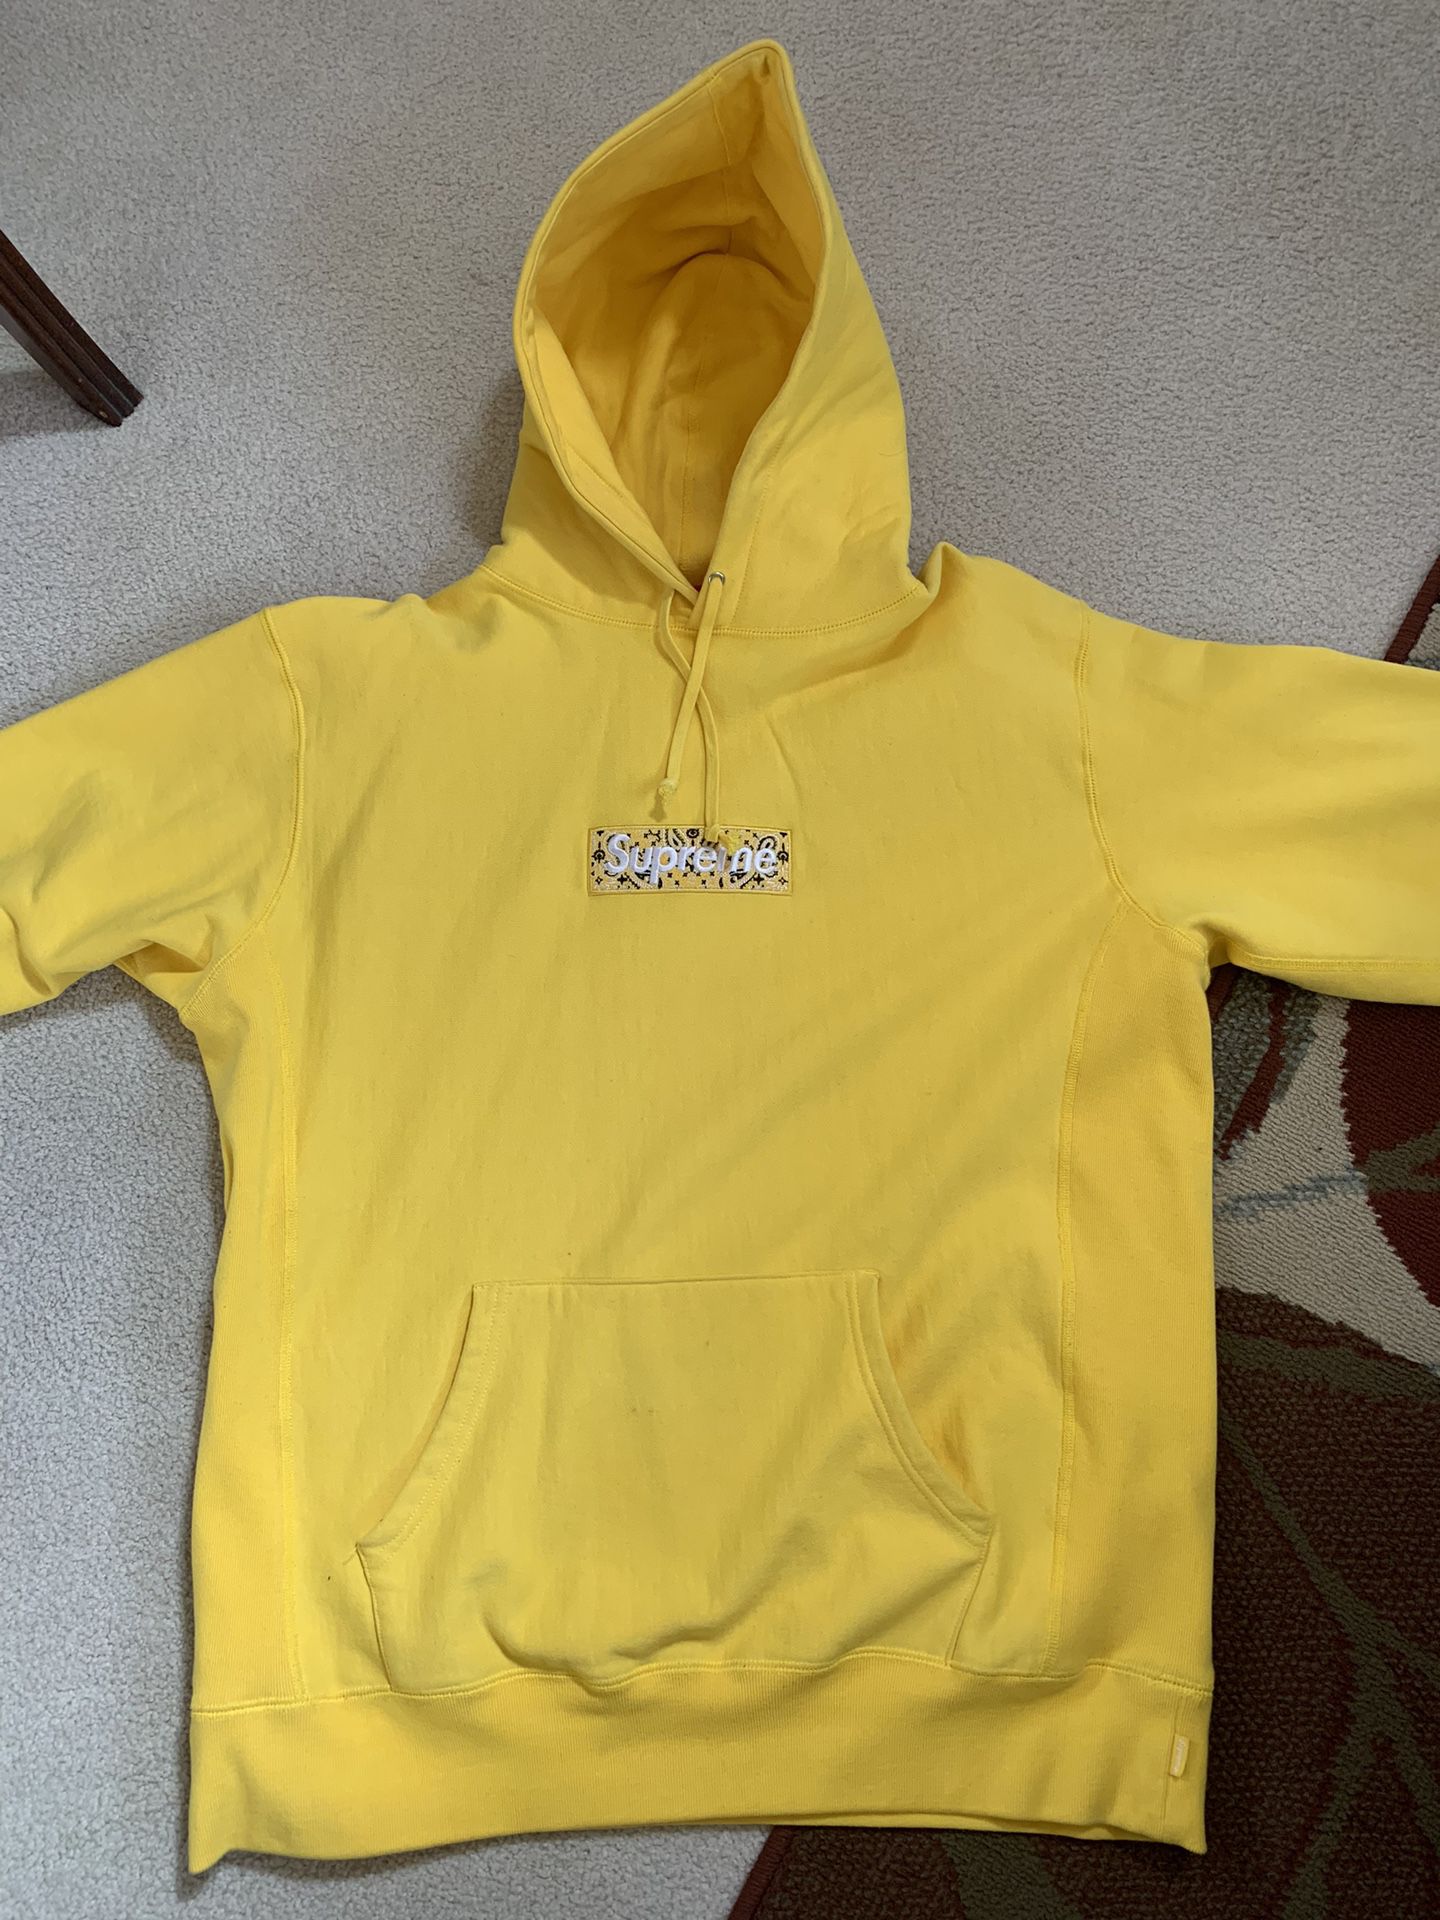 Supreme Bandana Box Logo Hoodie 'Yellow' Size Xl for Sale in